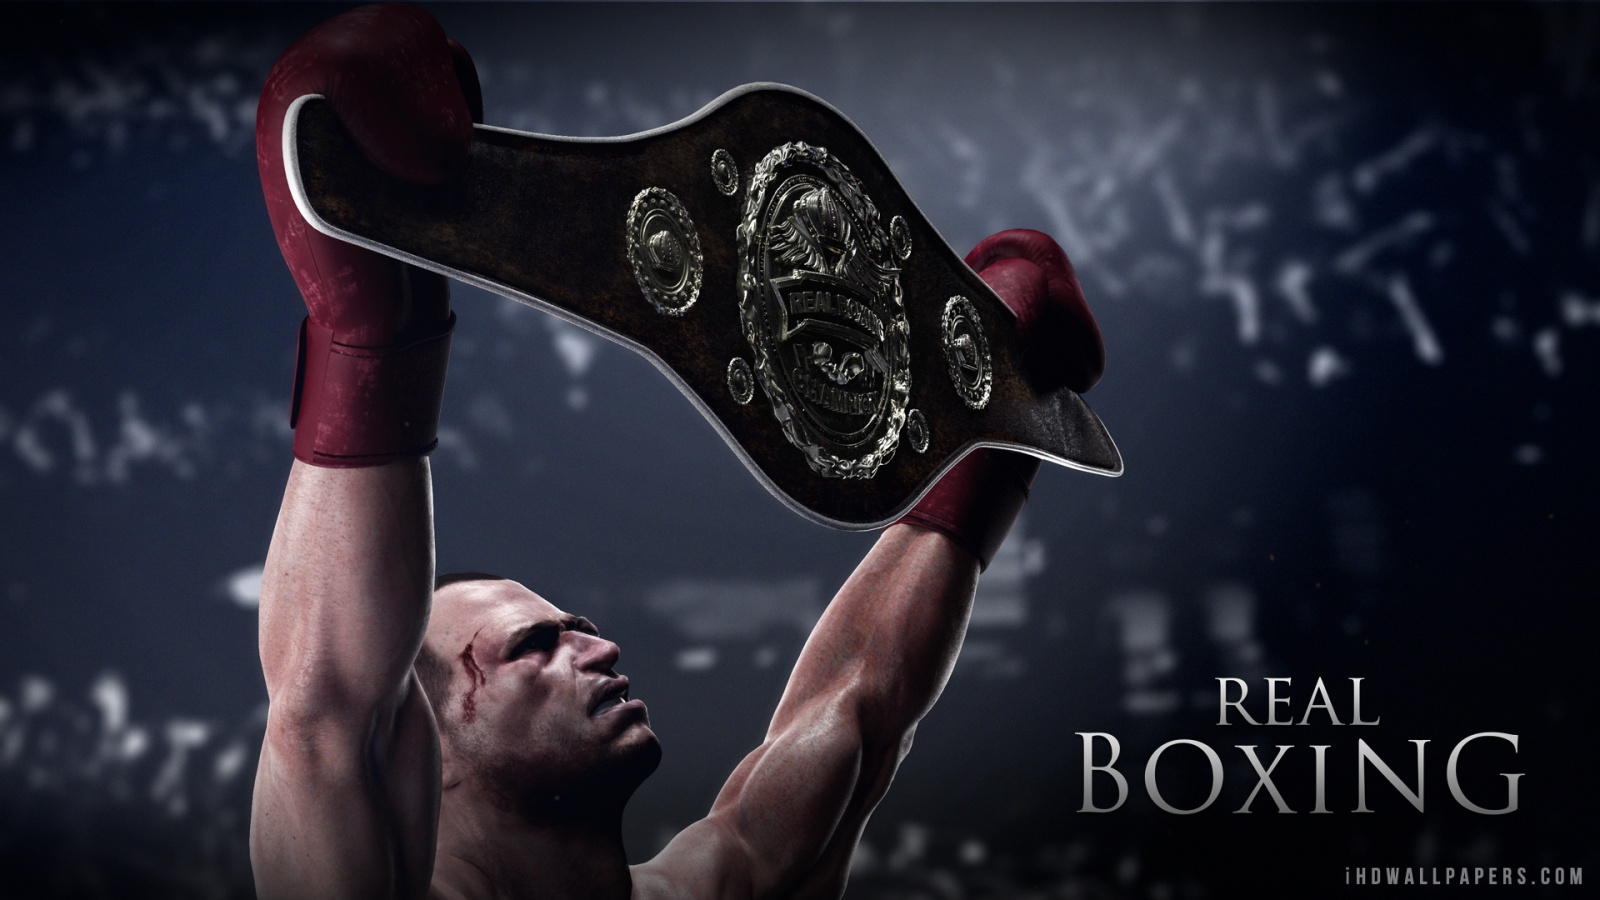 Real Boxing HD Wallpaper IHD